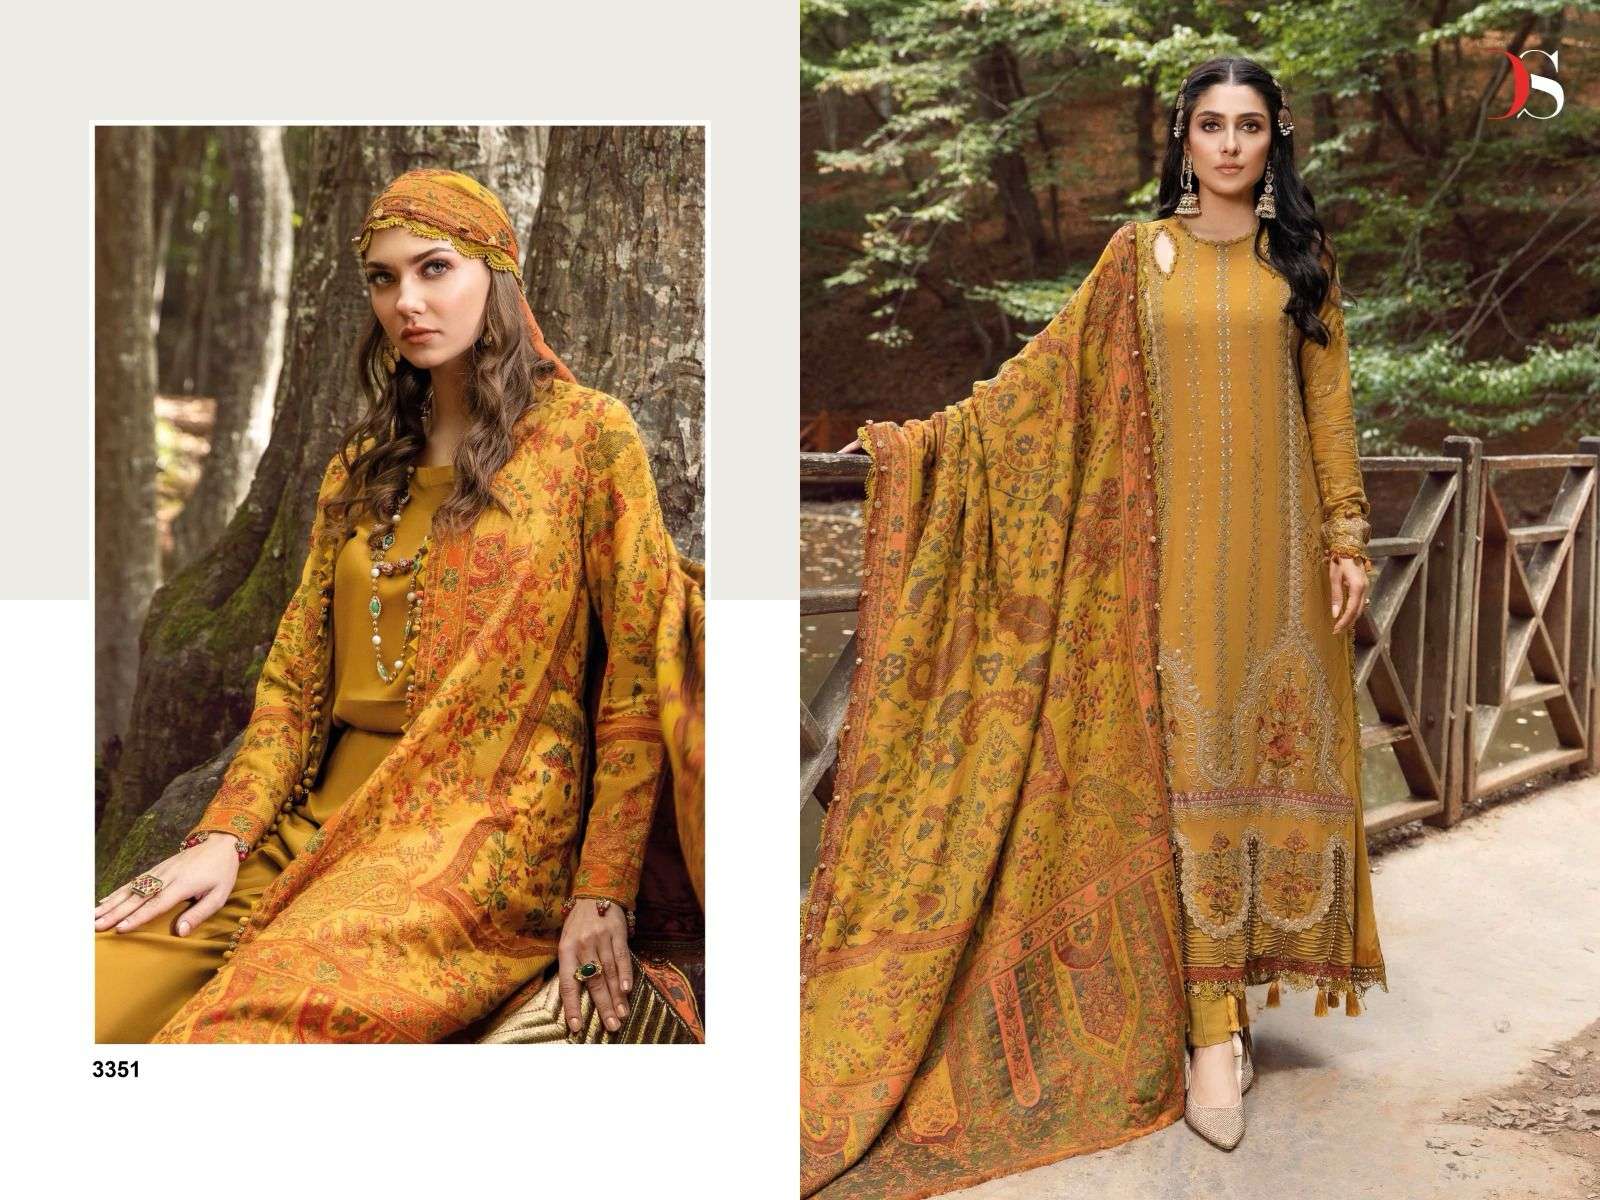 deepsy suits maria b embroidered vol-24 3351-3354 series latest designer partywear salwar kameez at wholesaler rate surat india gujarat